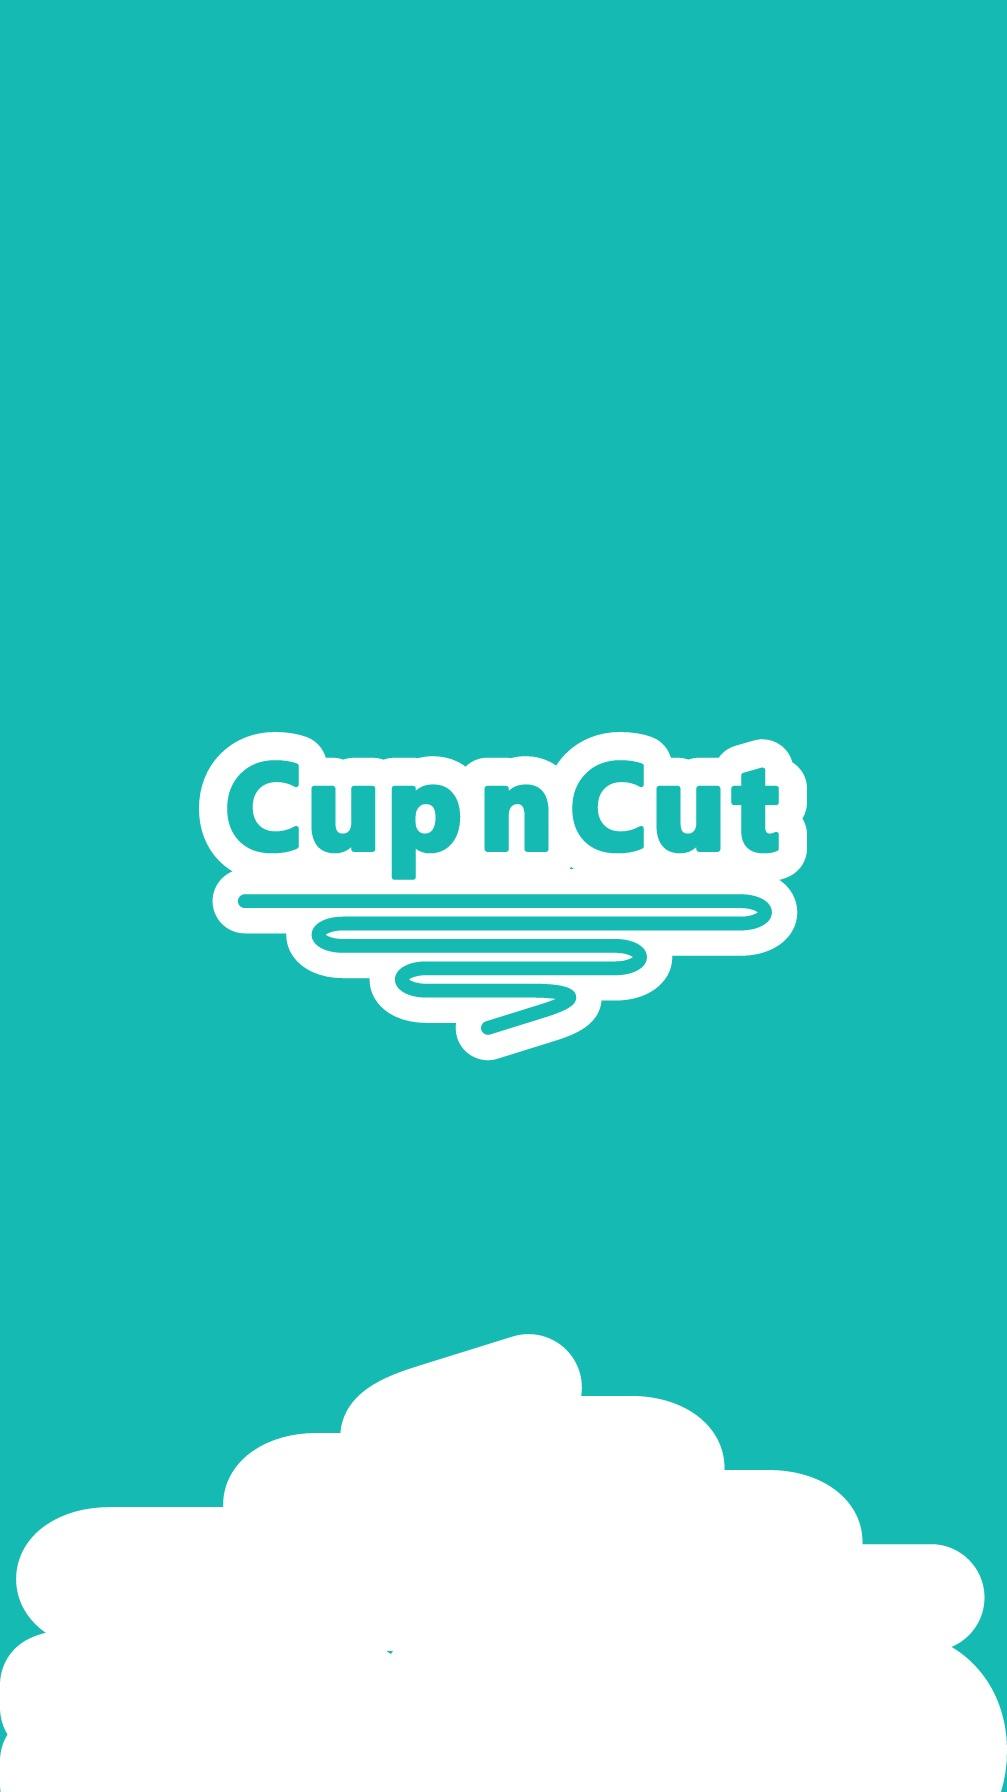 CUPCUT логотип. Шаблон кап Кут 6/5. Cup Cut.